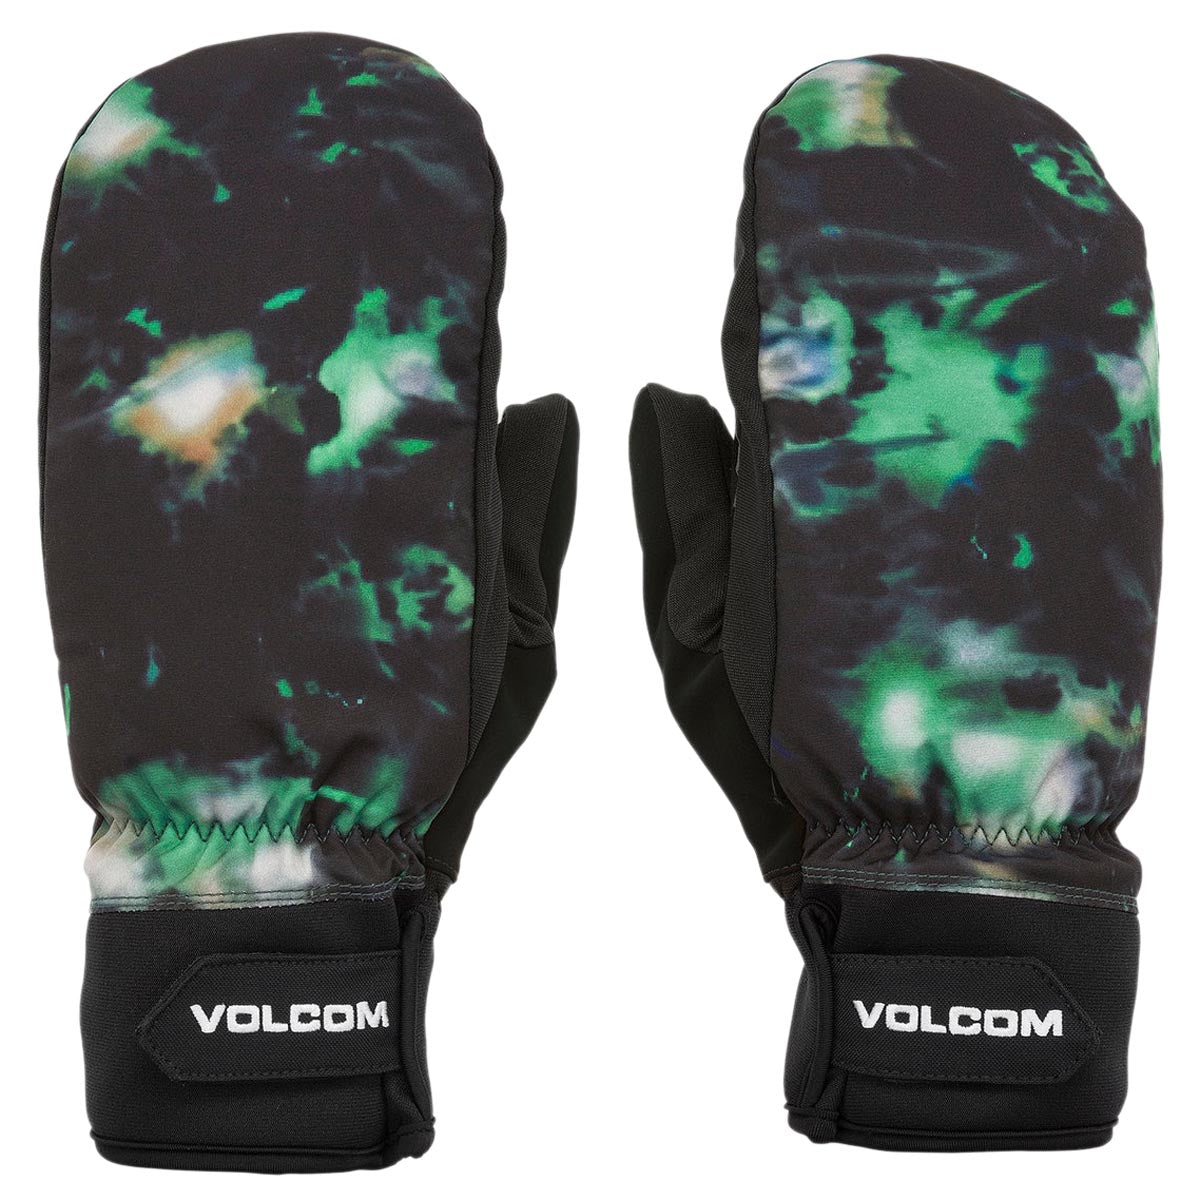 Volcom V.co Nyle Mitt Snowboard Gloves - Spritz Black image 1